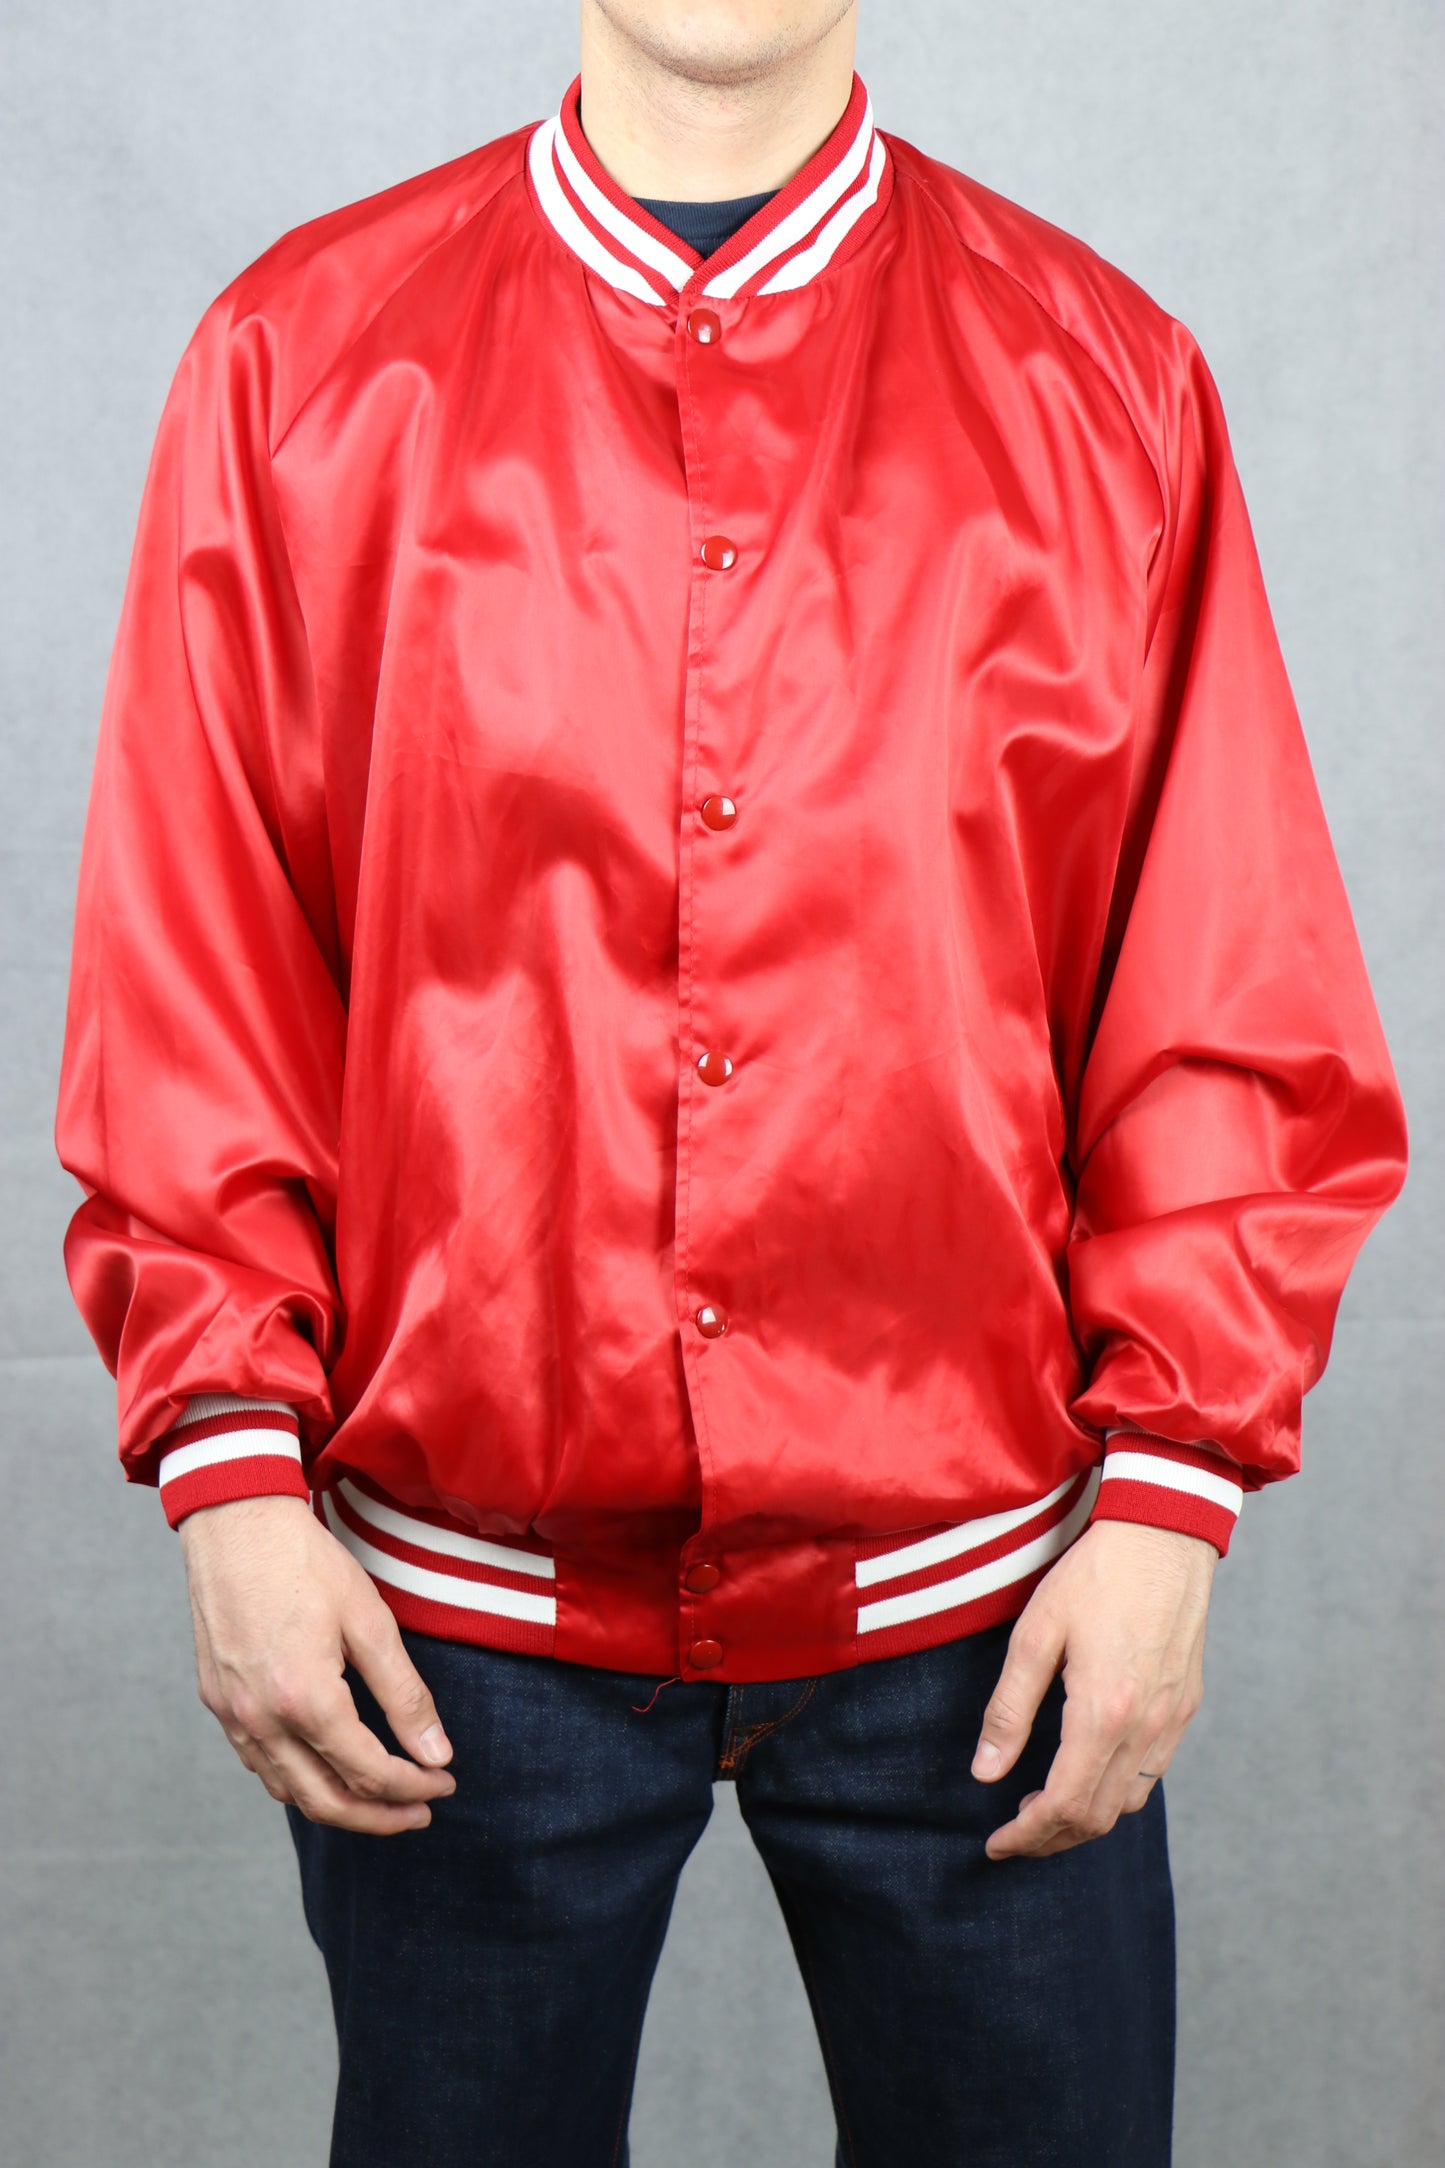 Satin Red Bomber Jacket (Flyin) - vintage clothing clochard92.com